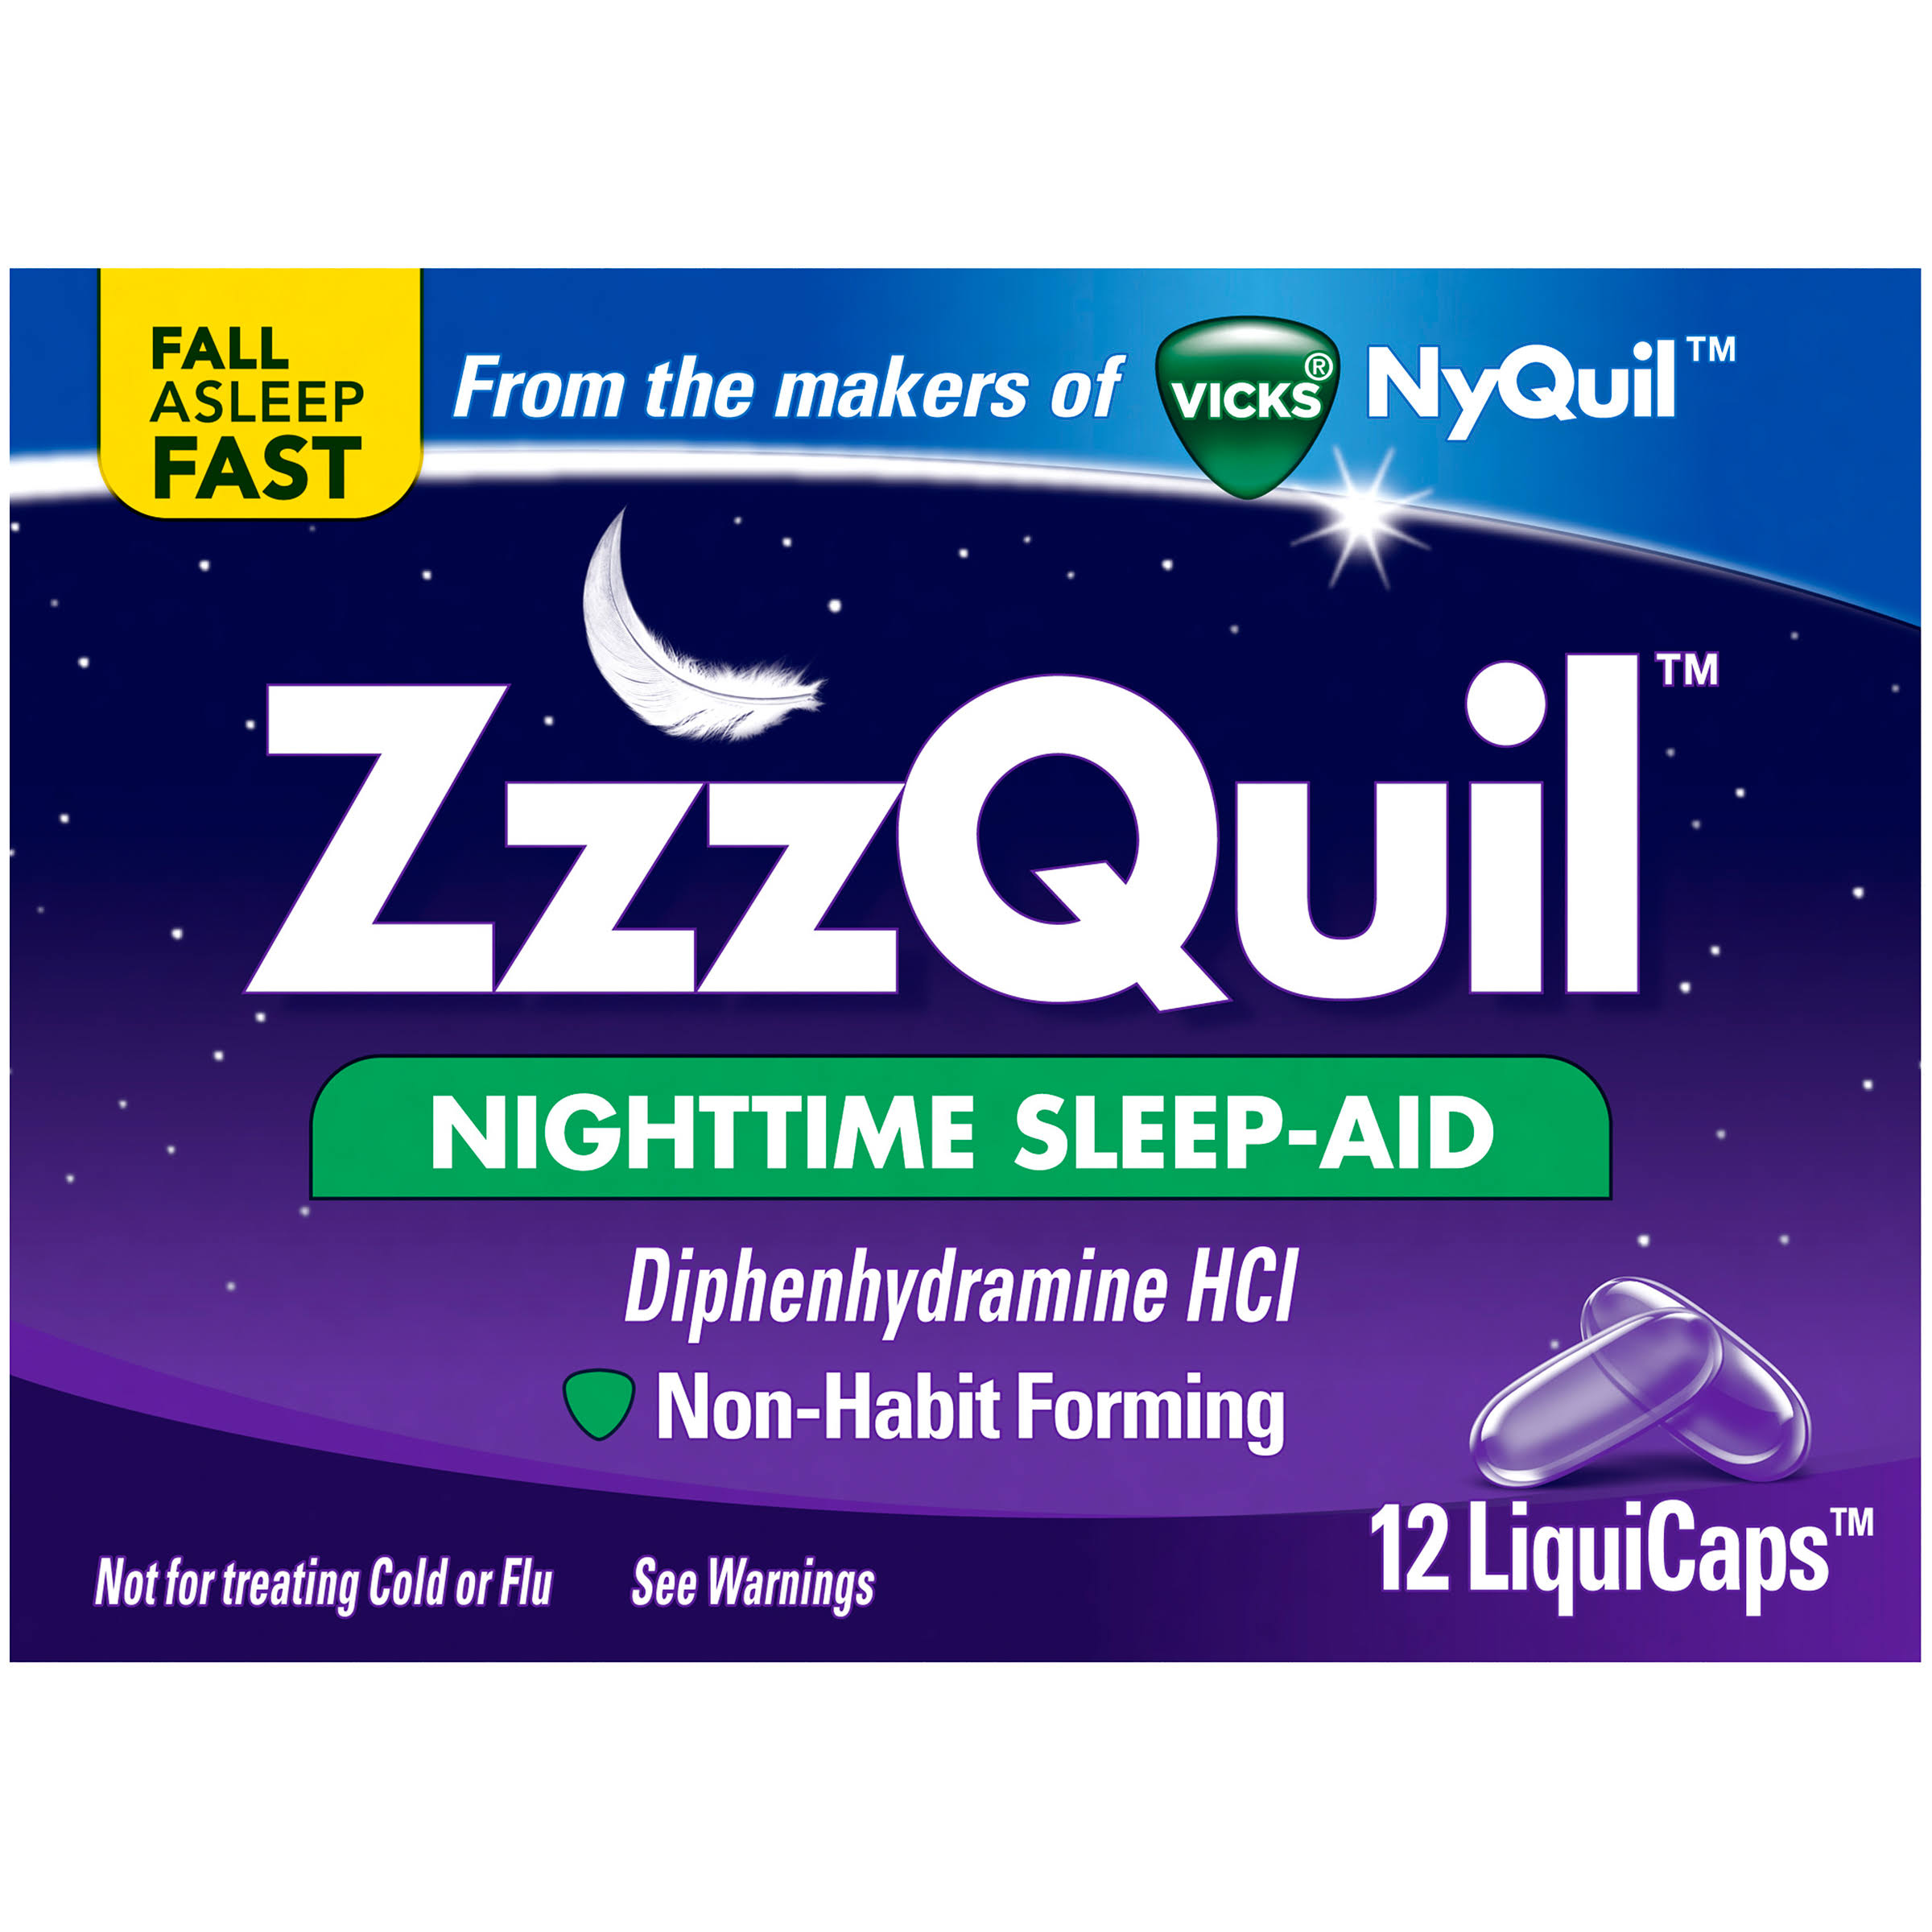 ZzzQuil Nighttime Sleep-Aid LiquiCaps - 12ct